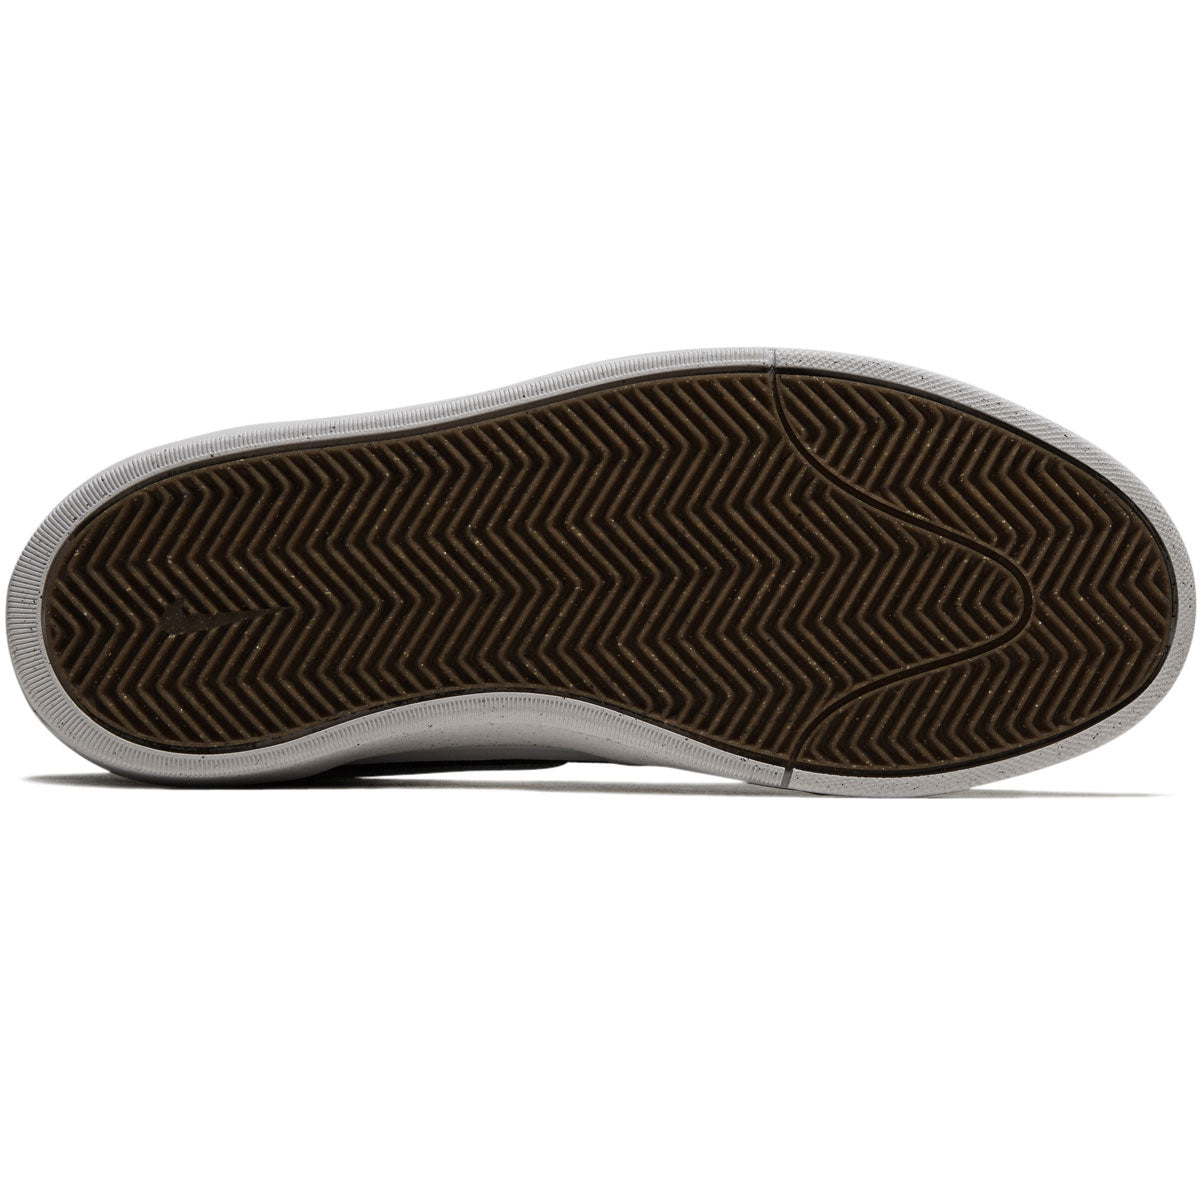 Nike SB React Leo Shoes - Black/White/Black/Gum Light Brown image 4